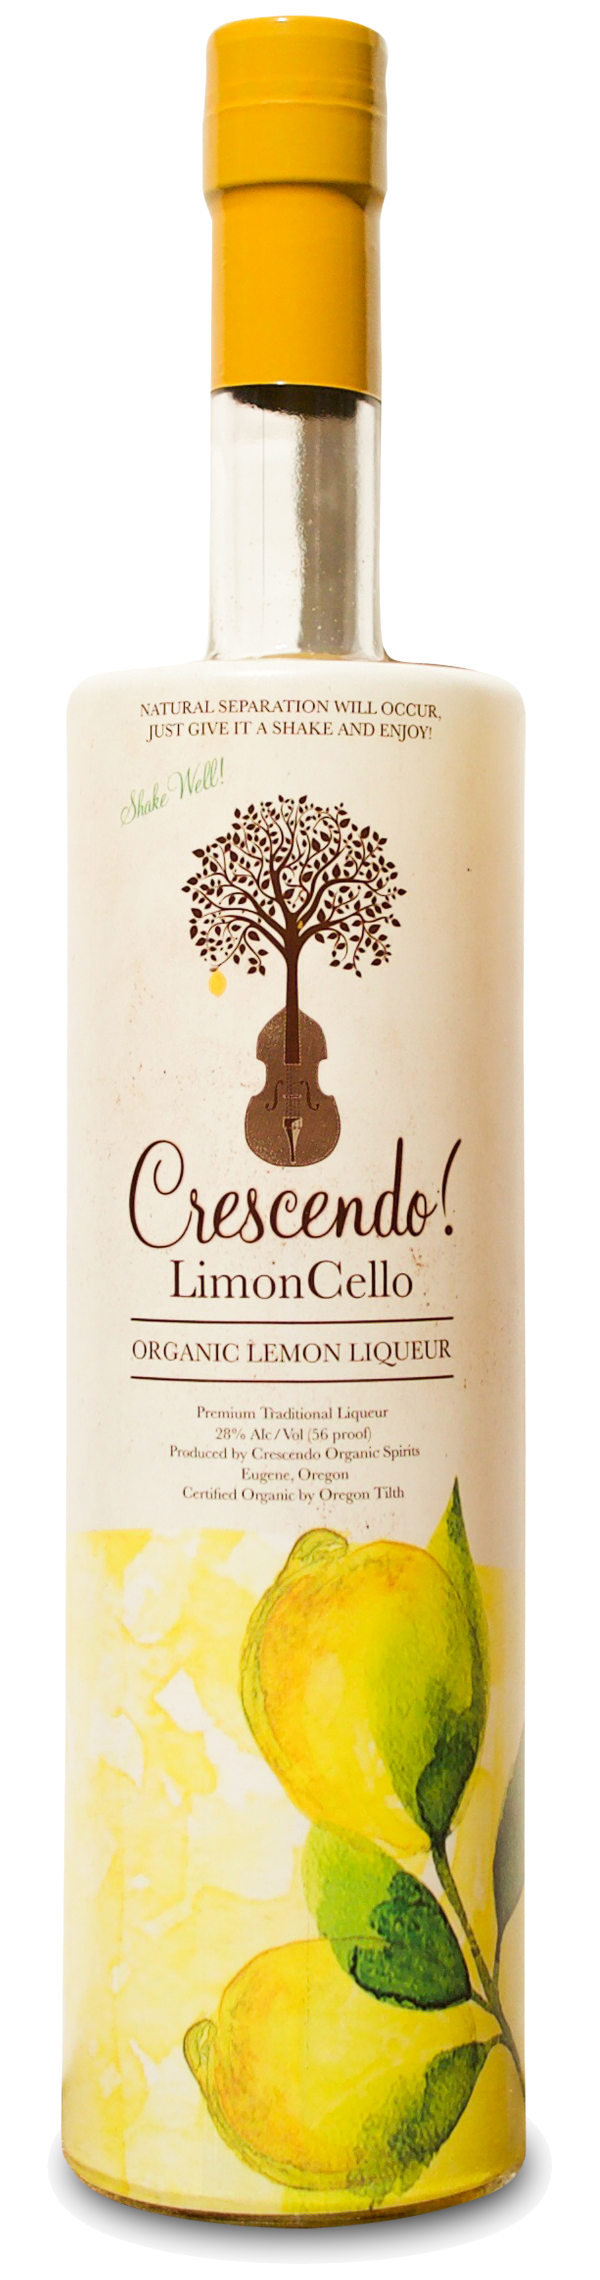 Crescendo LimonCello Organic Lemon Liqueur